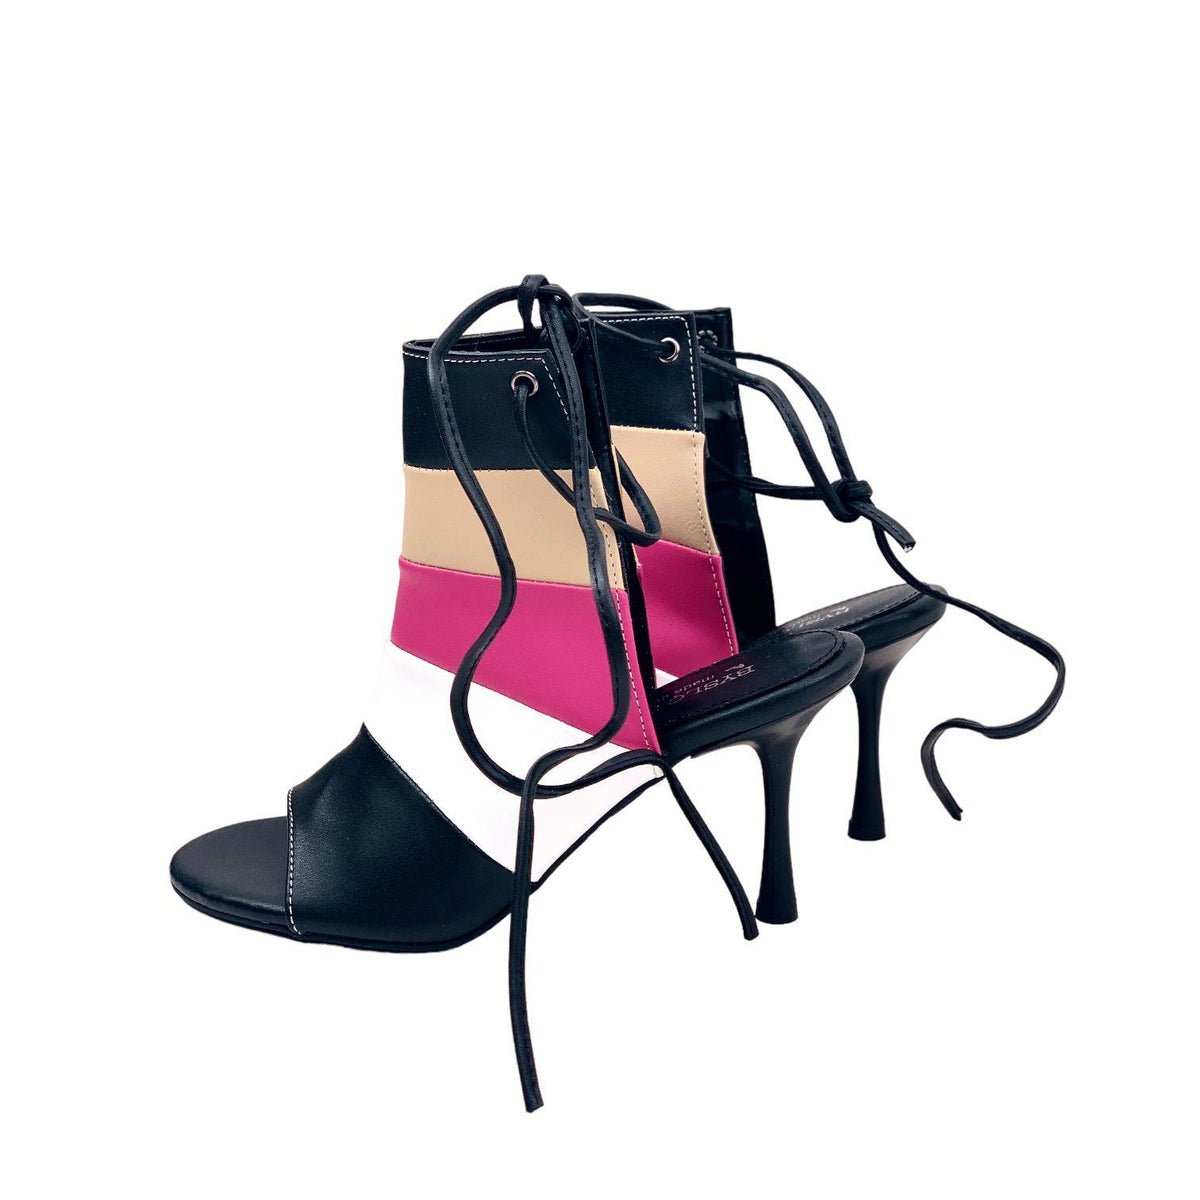 Women's Gebb Black Thin Heeled Closed Shoes 8 Cm 106 - STREETMODE ™